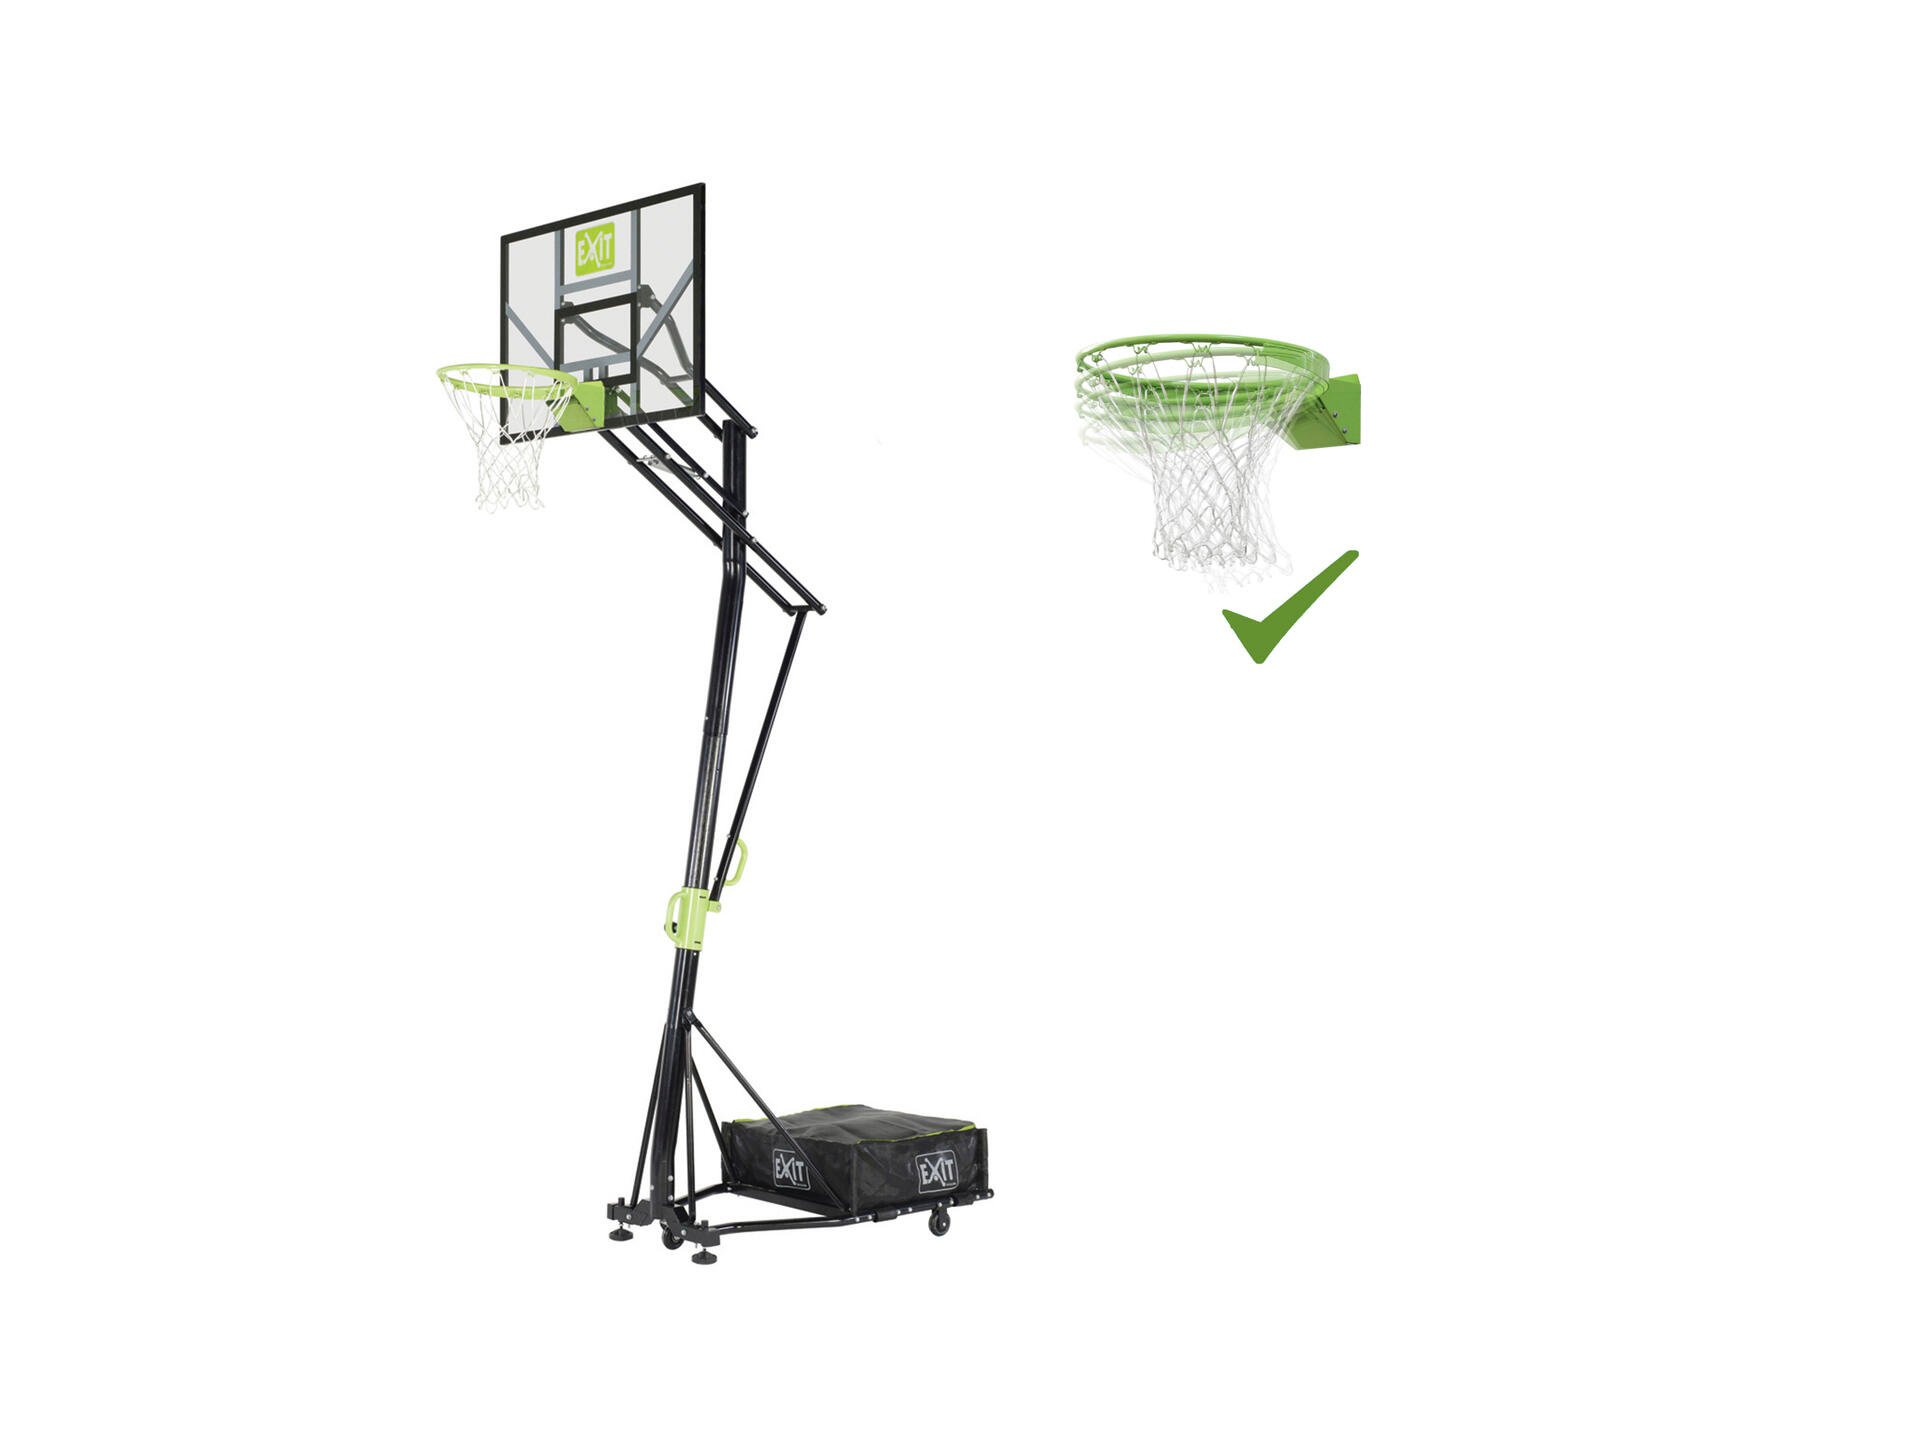 Exit Toys Galaxy basketbalbord met dunkring + wielen groen/zwart